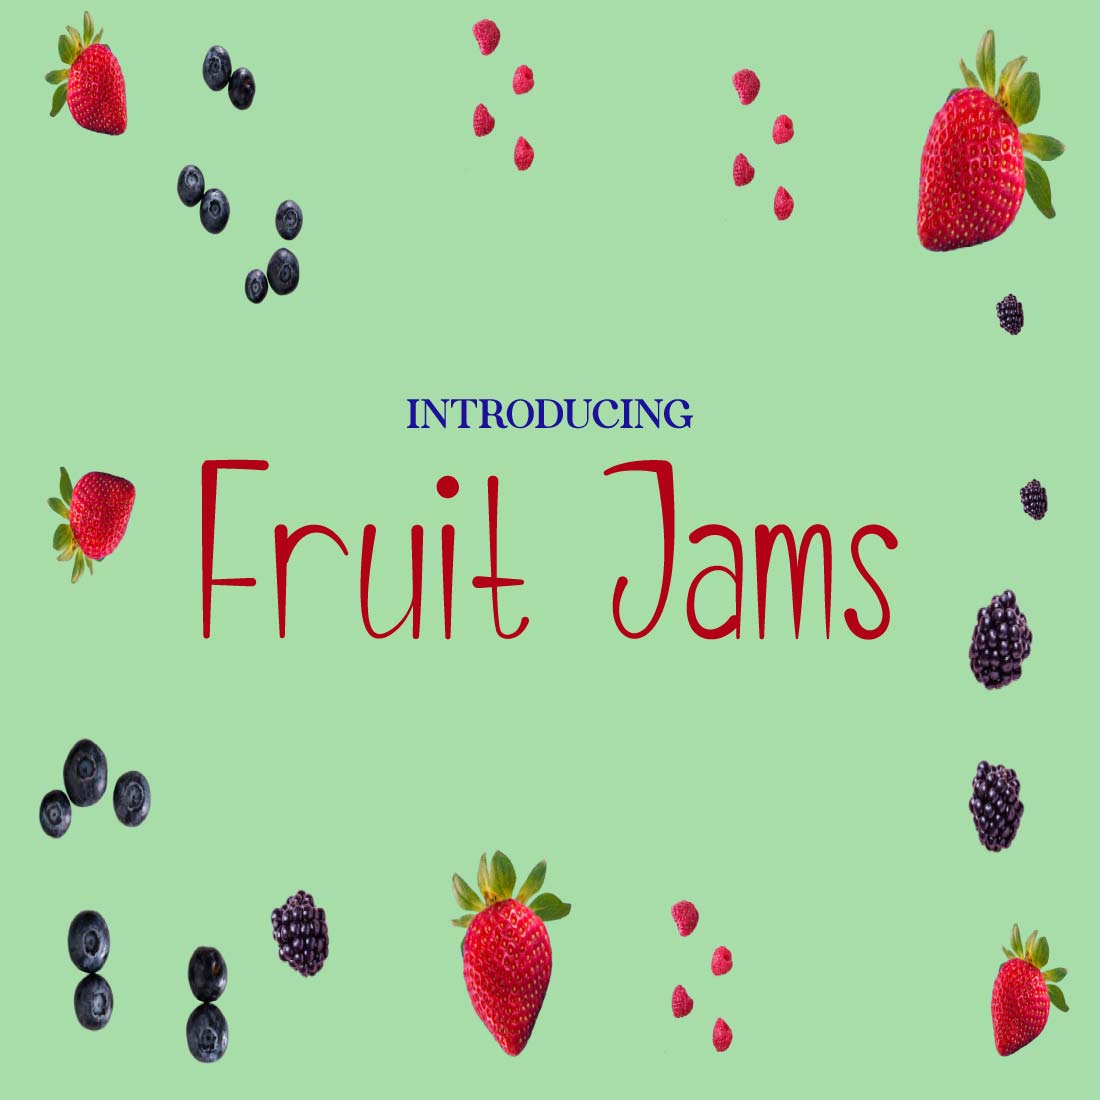 Fruit Jams | Handwritten Font cover image.